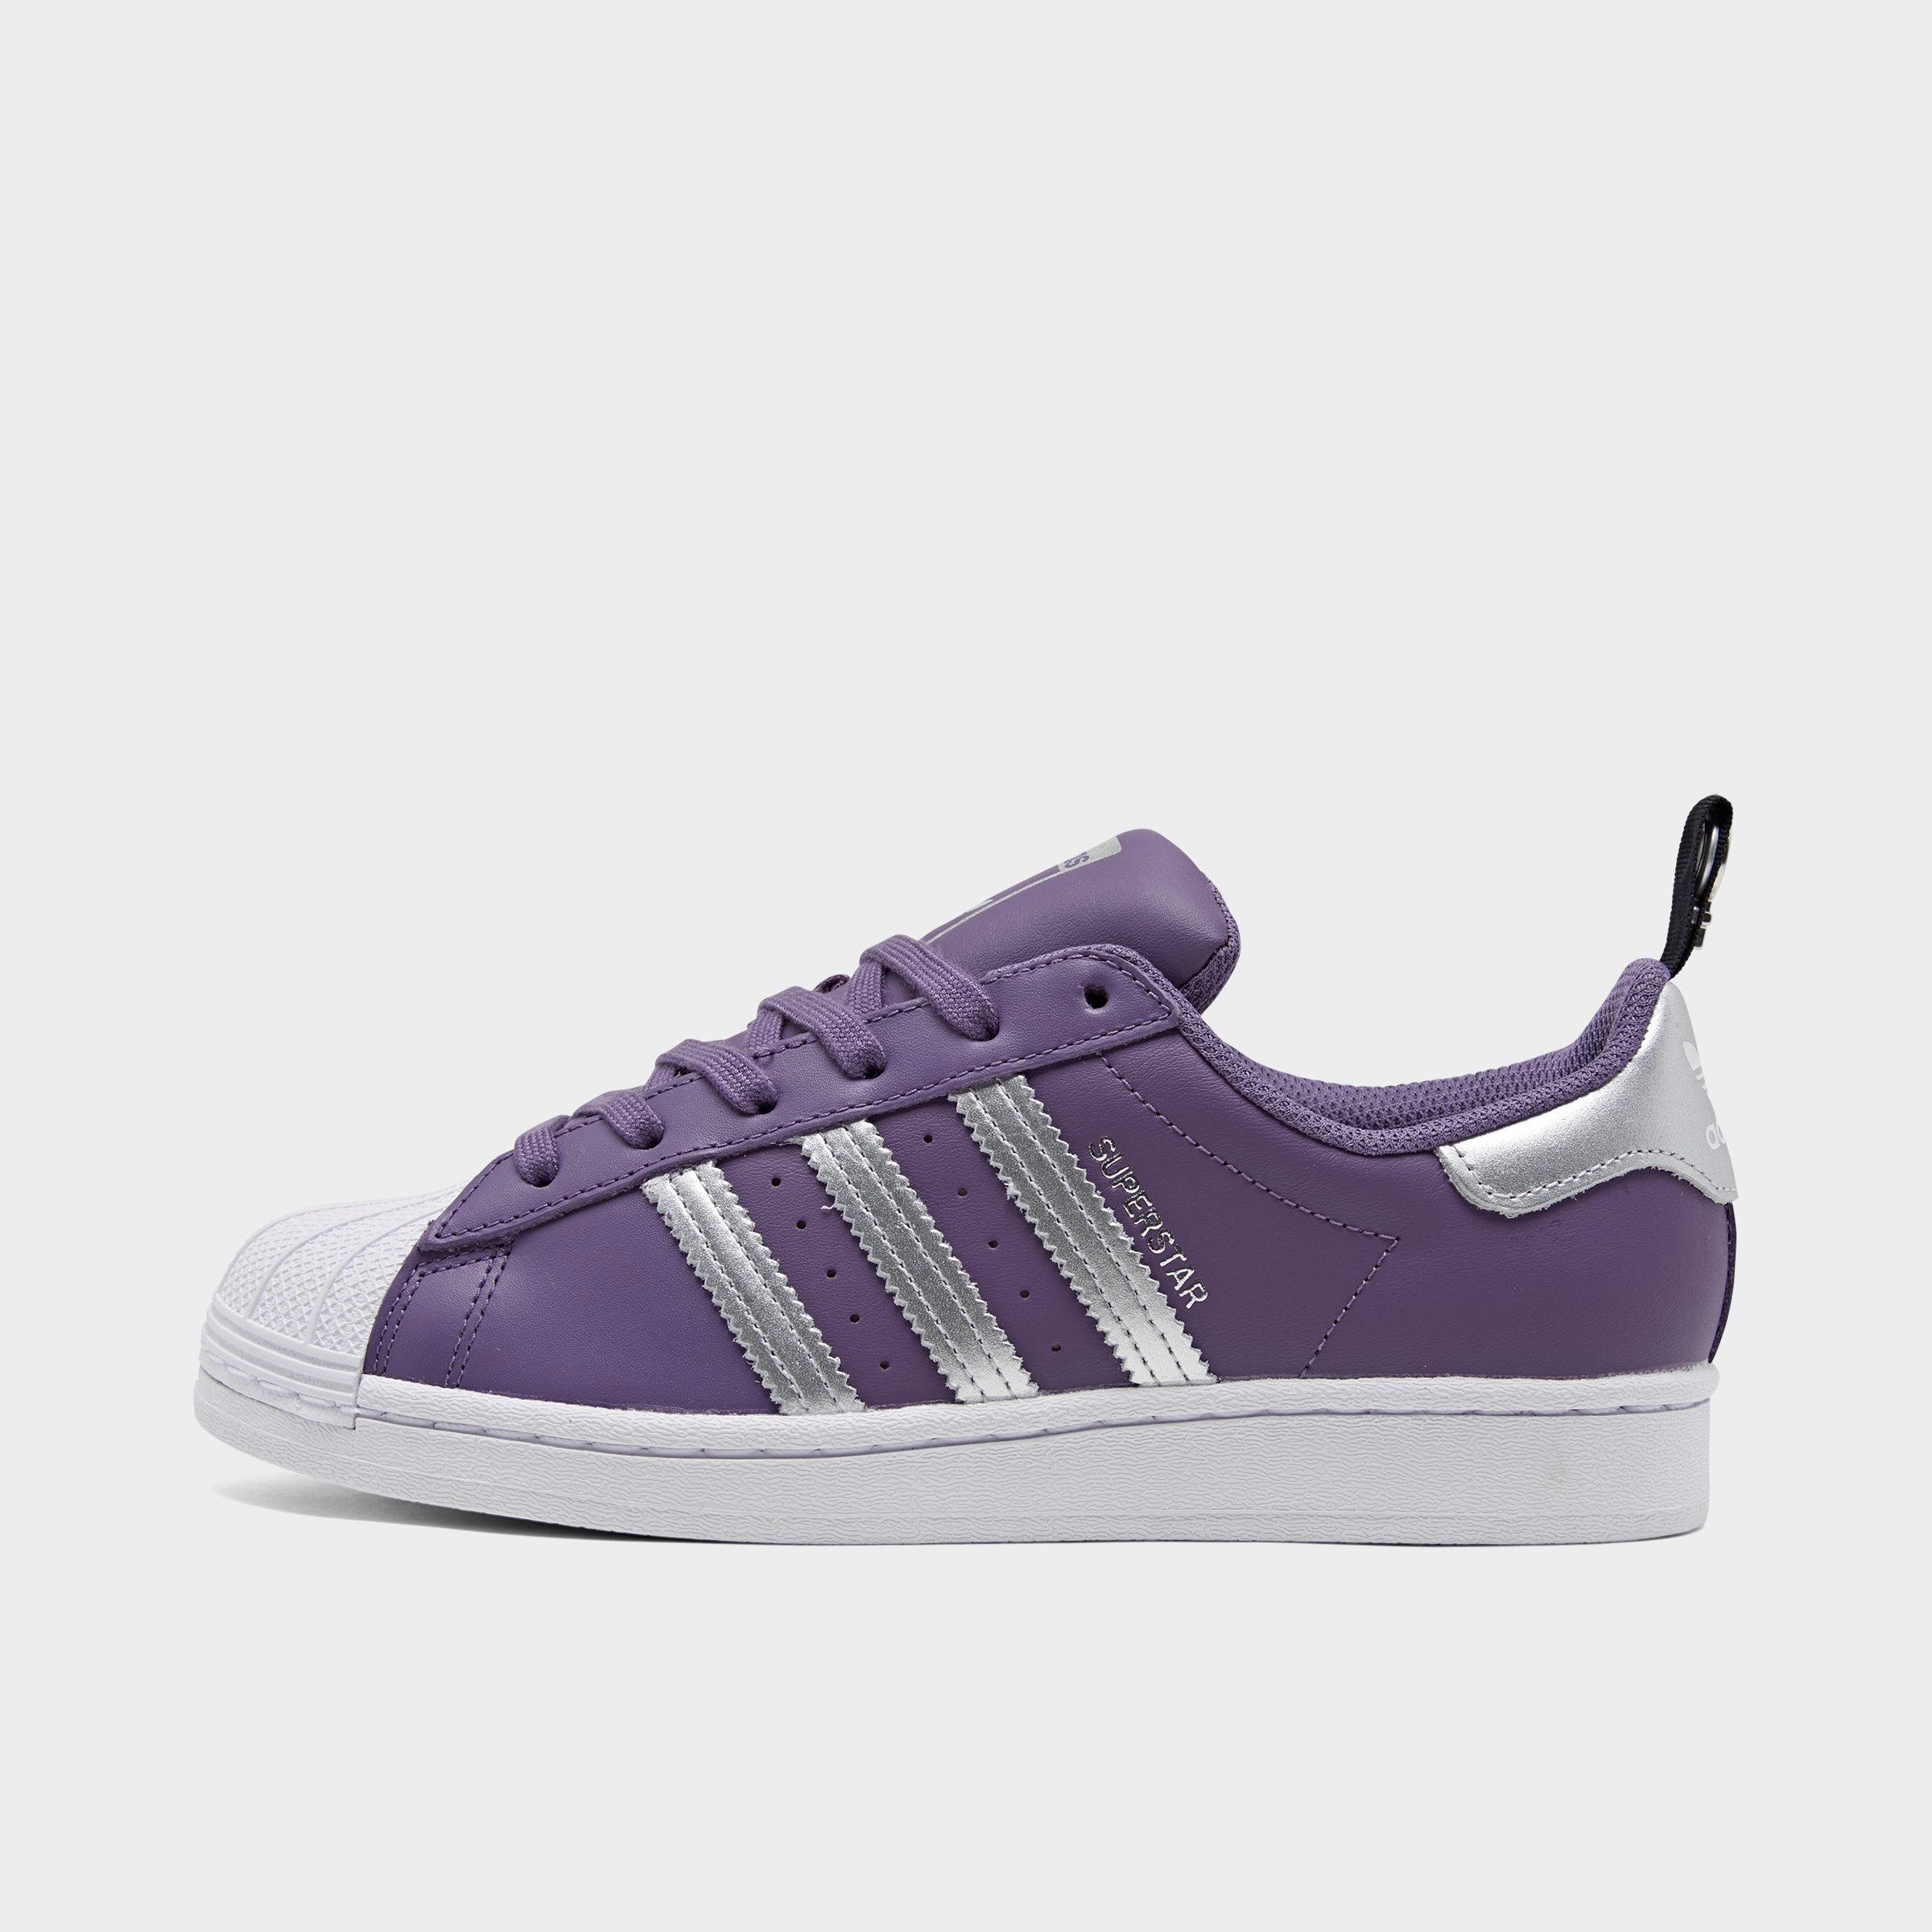 adidas superstar purple stripes